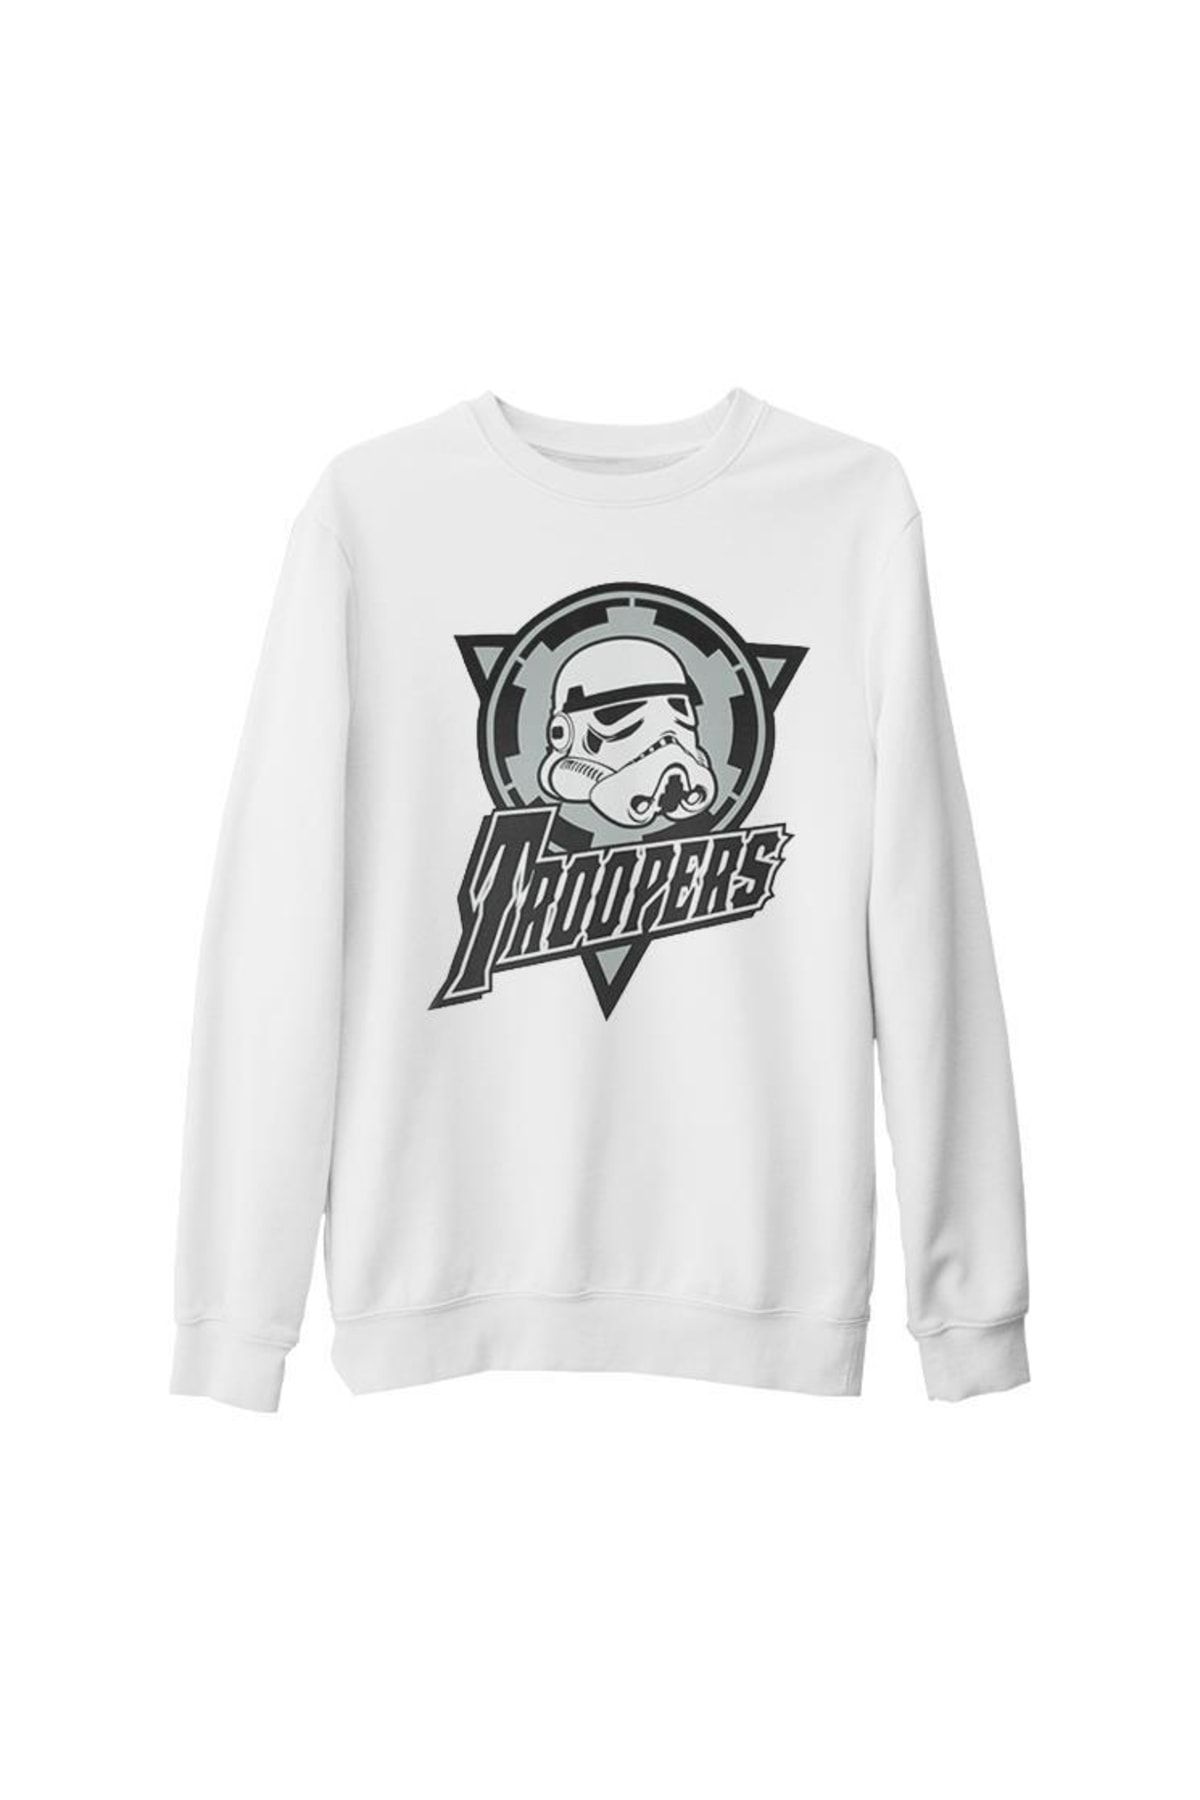 Lord T-Shirt Star Wars Trooper 2 Beyaz Kalın Sweatshirt